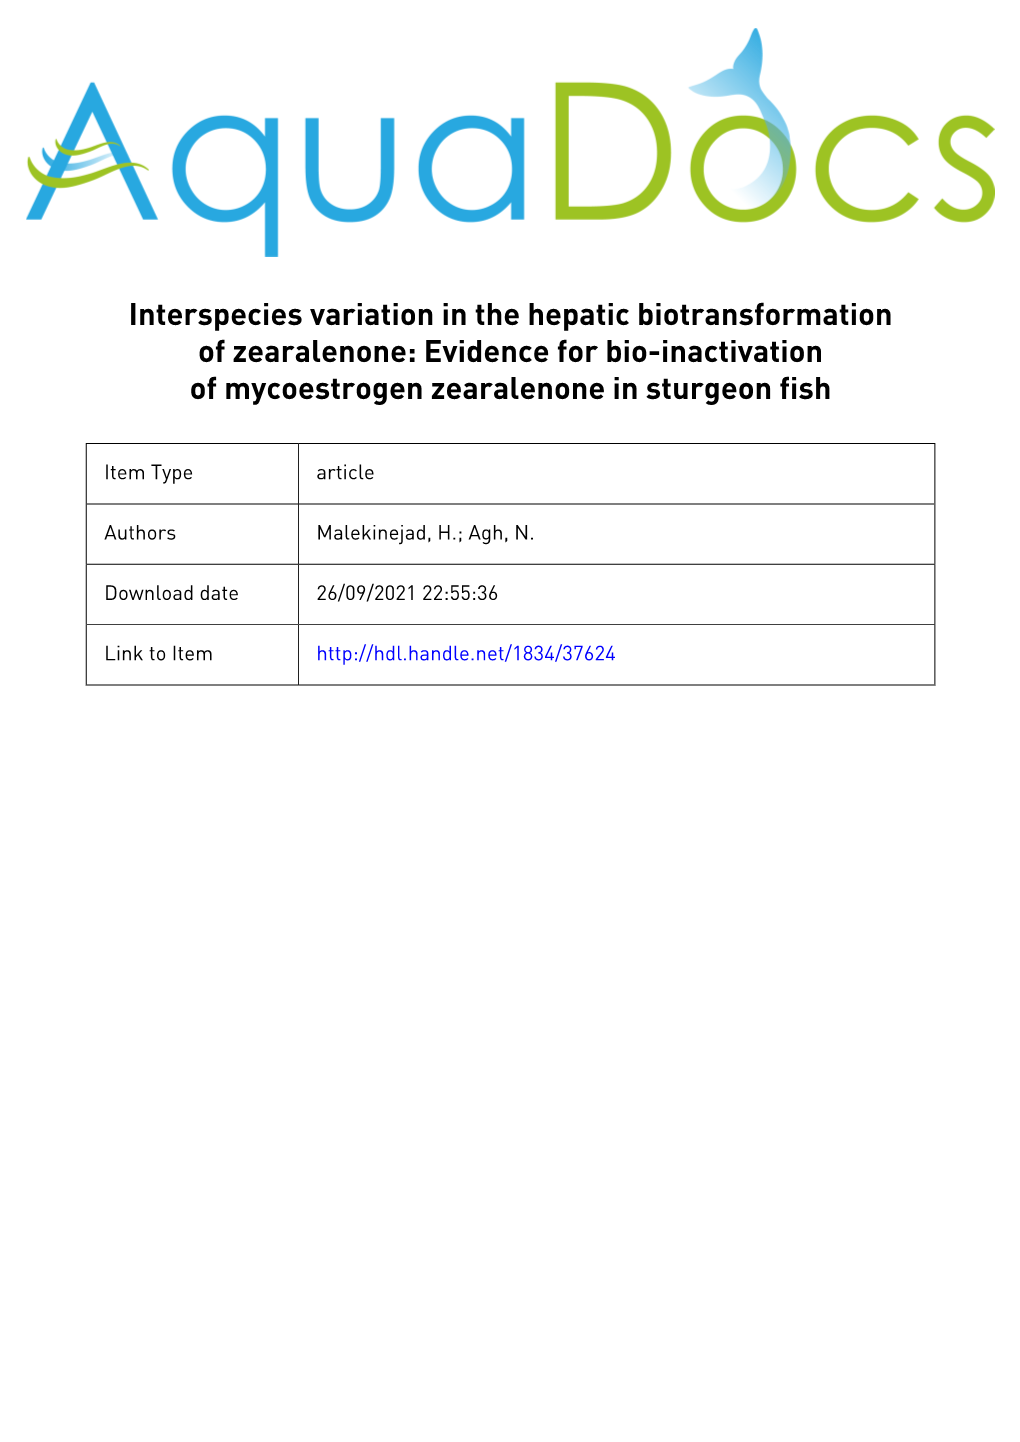 Interspecies Variation in the Hepatic Biotransformation of Zearalenone: Evidence for Bio-Inactivation of Mycoestrogen Zearalenone in Sturgeon Fish